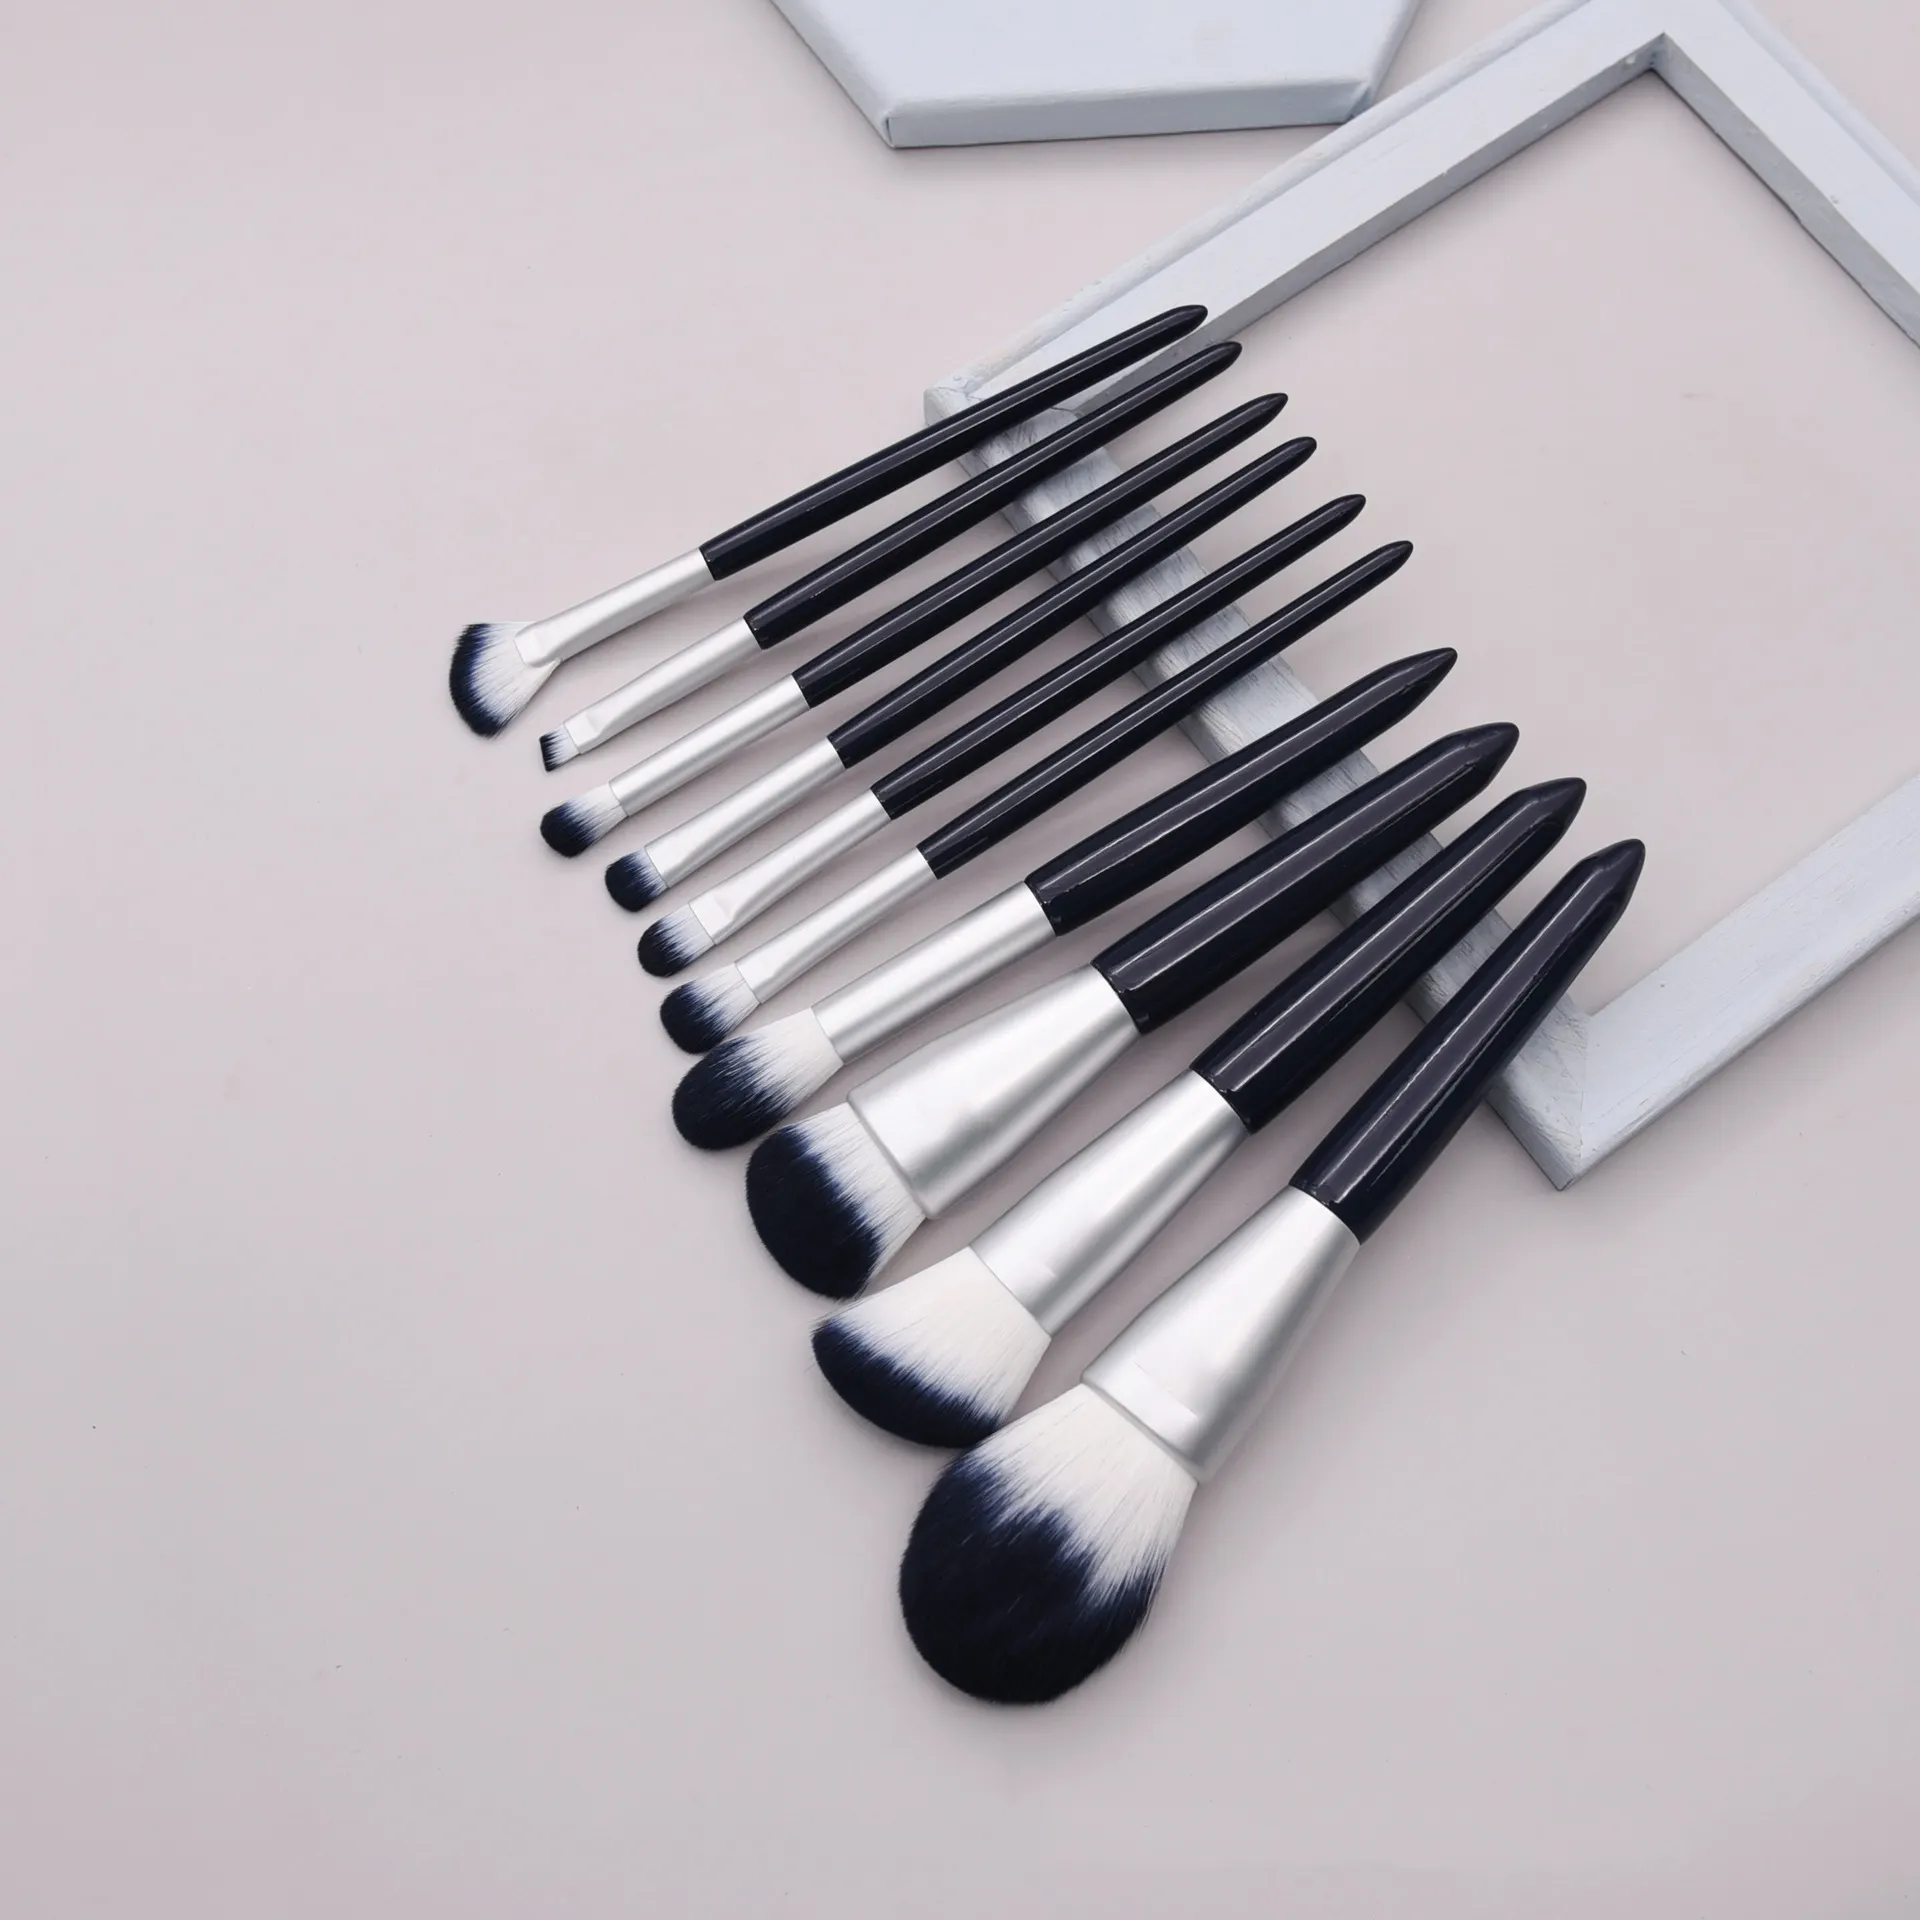 New Makeup Brushes 10 Pcs Set Premium With Case